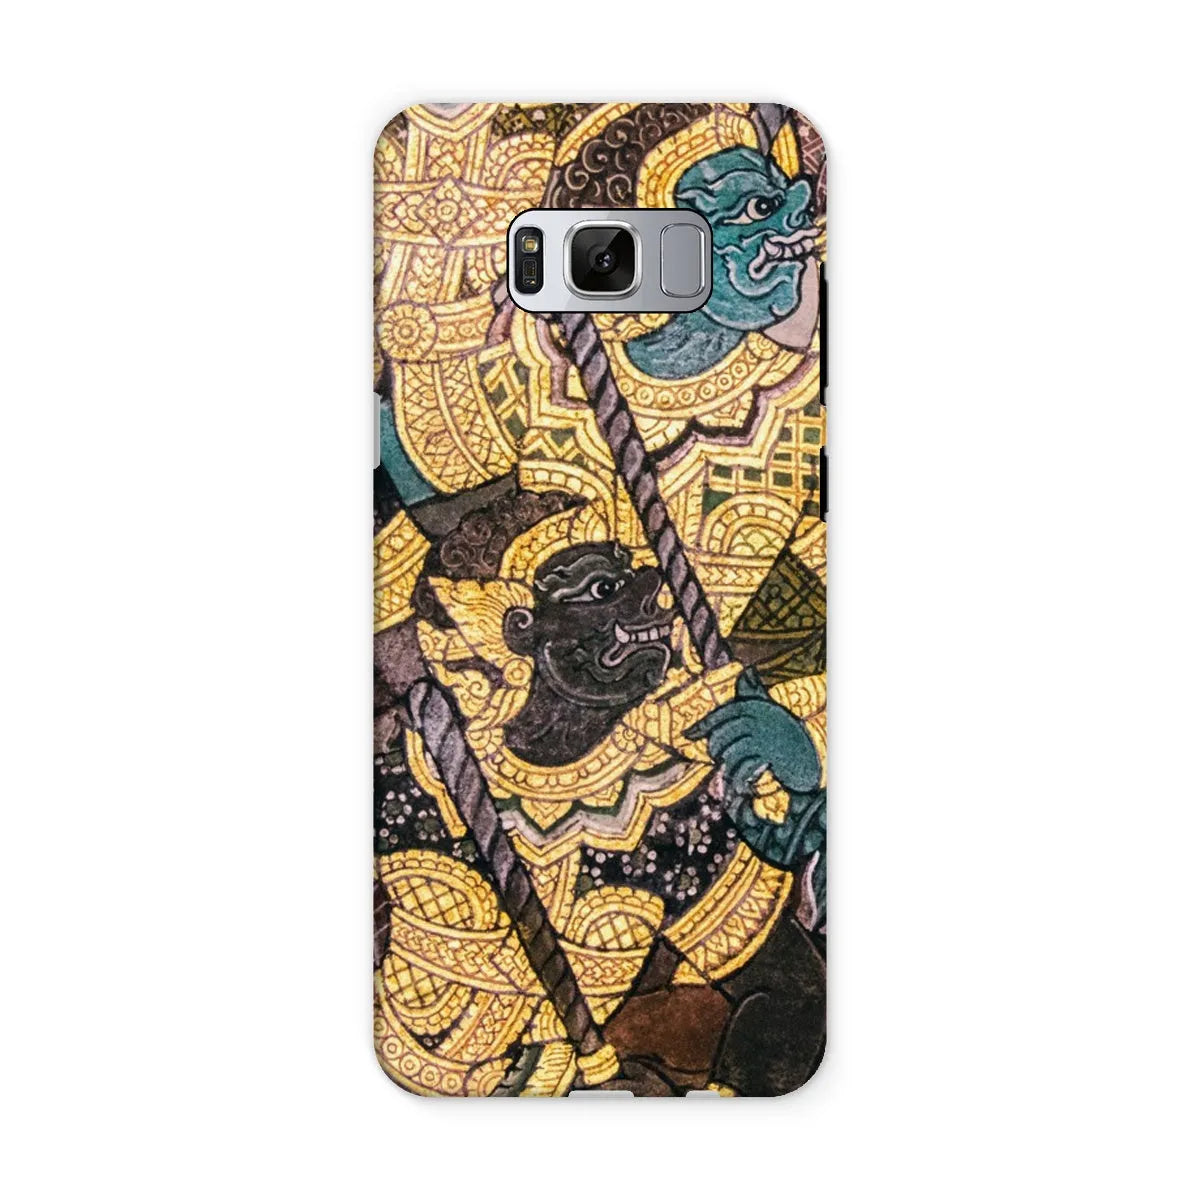 Action Men - Thai Aesthetic Art Phone Case - Samsung Galaxy S8 / Matte - Mobile Phone Cases - Aesthetic Art